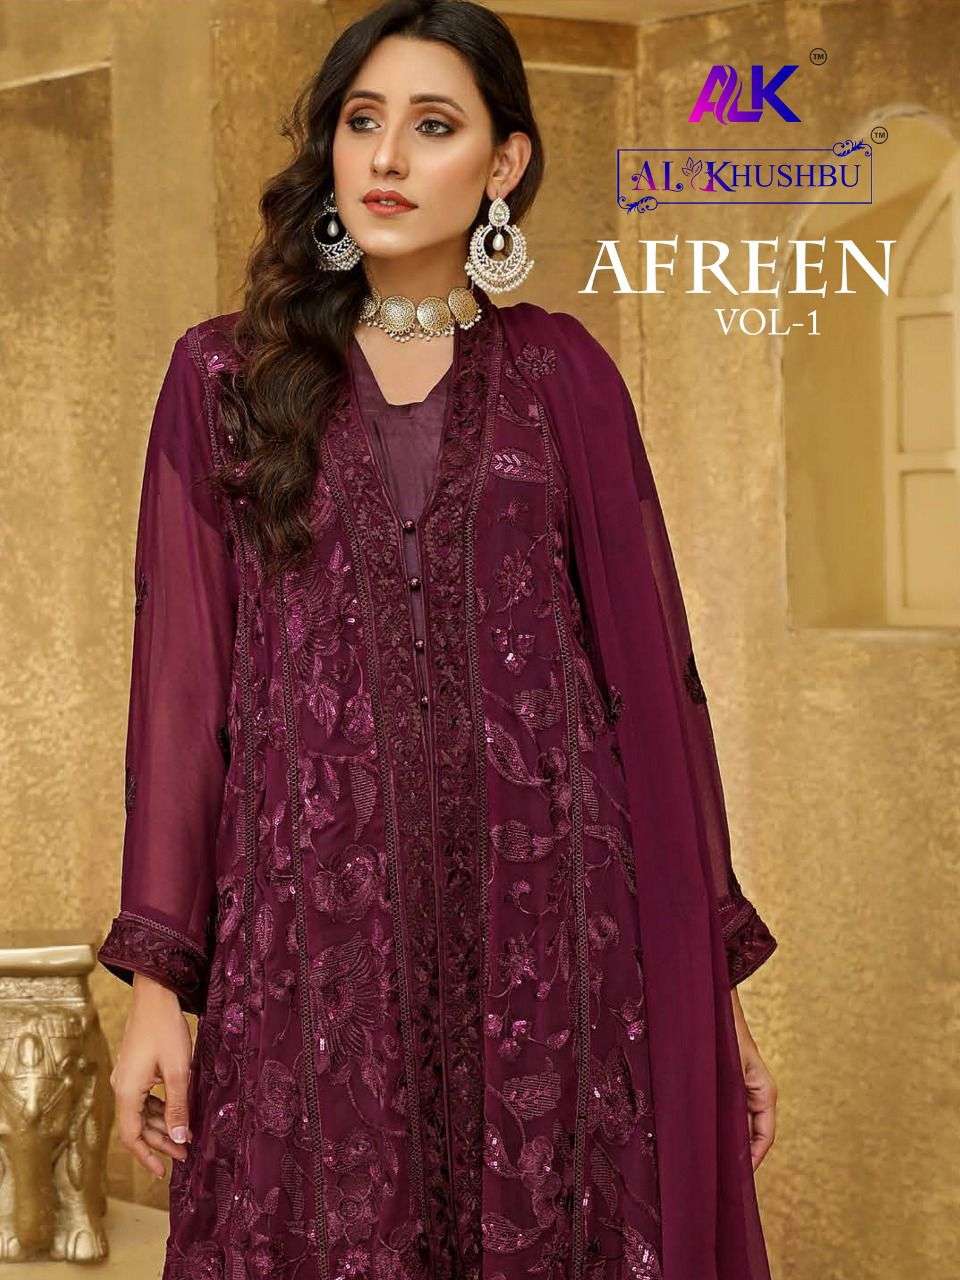 afreen vol 1 by al khushbu georgette pakistani suits